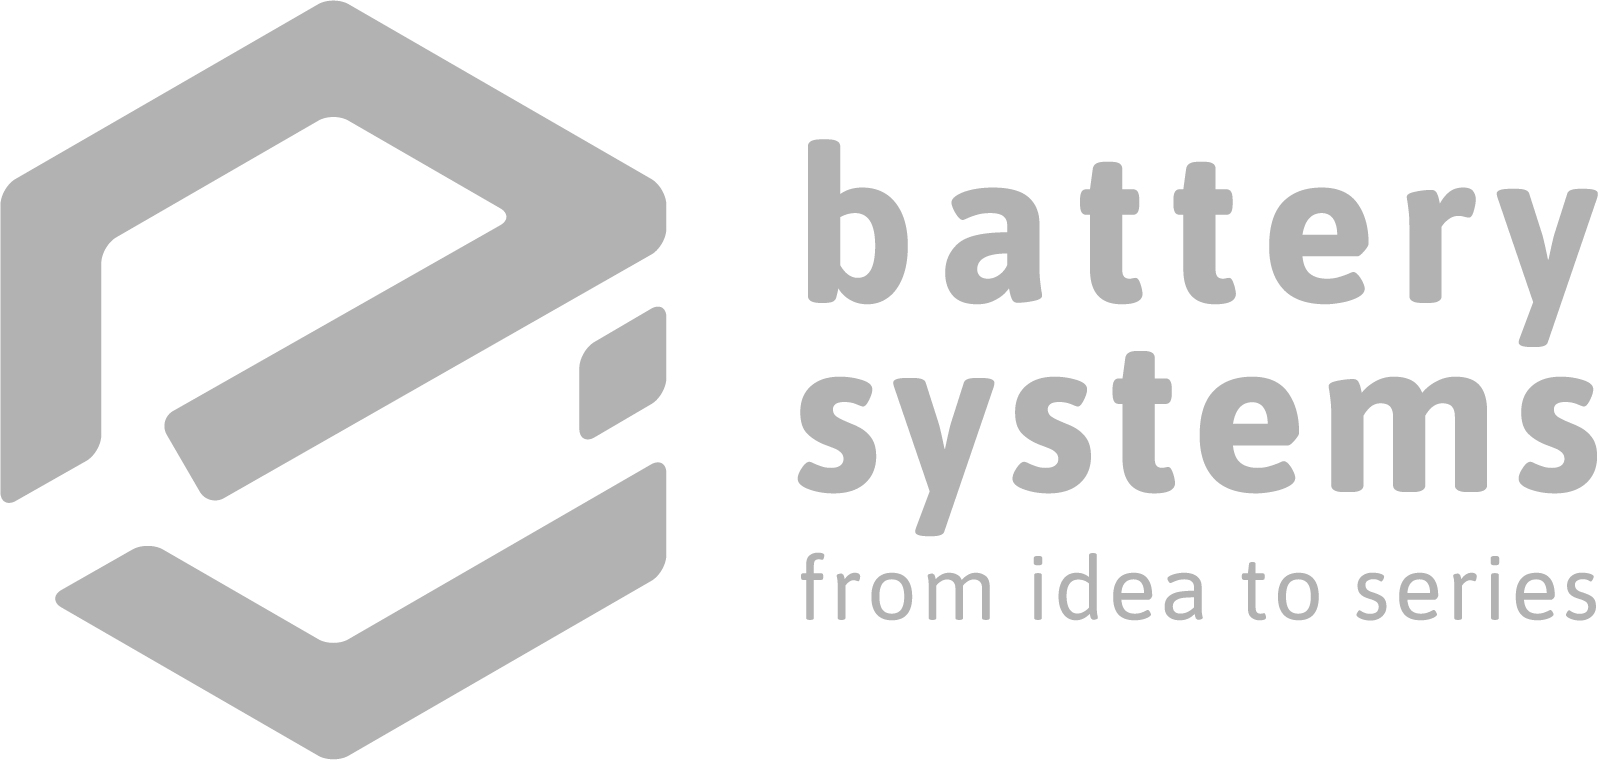 ebatterysystems